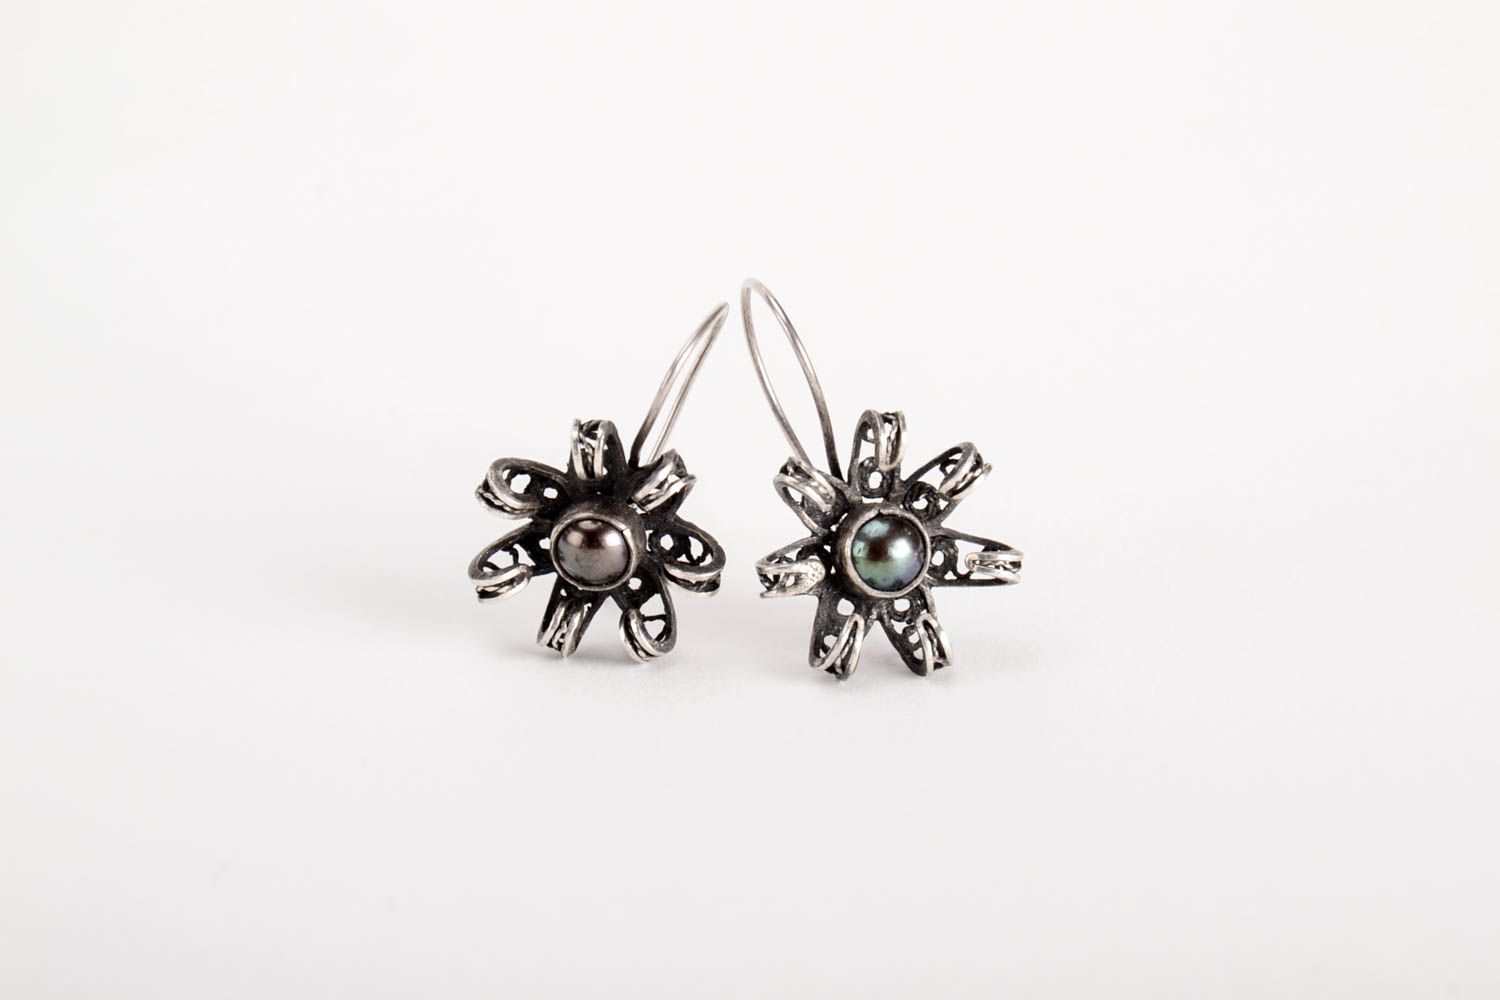 Handmade earrings designer earrings unusual silver earrings gift ideas photo 4